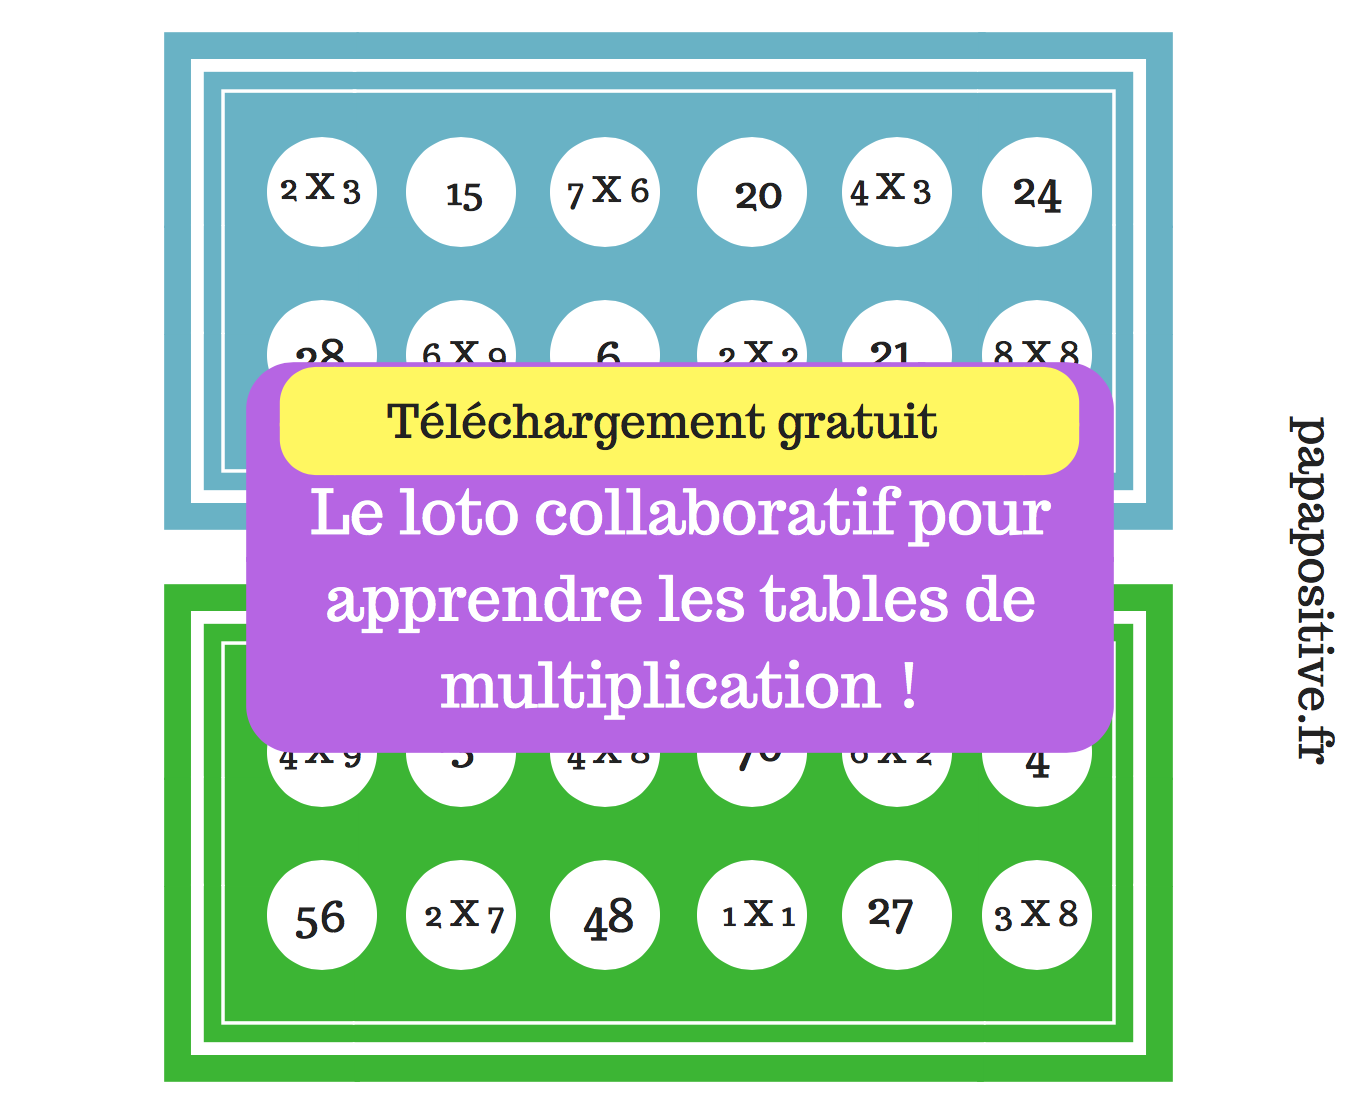 Le loto des multiplications : un jeu de tables de multiplication